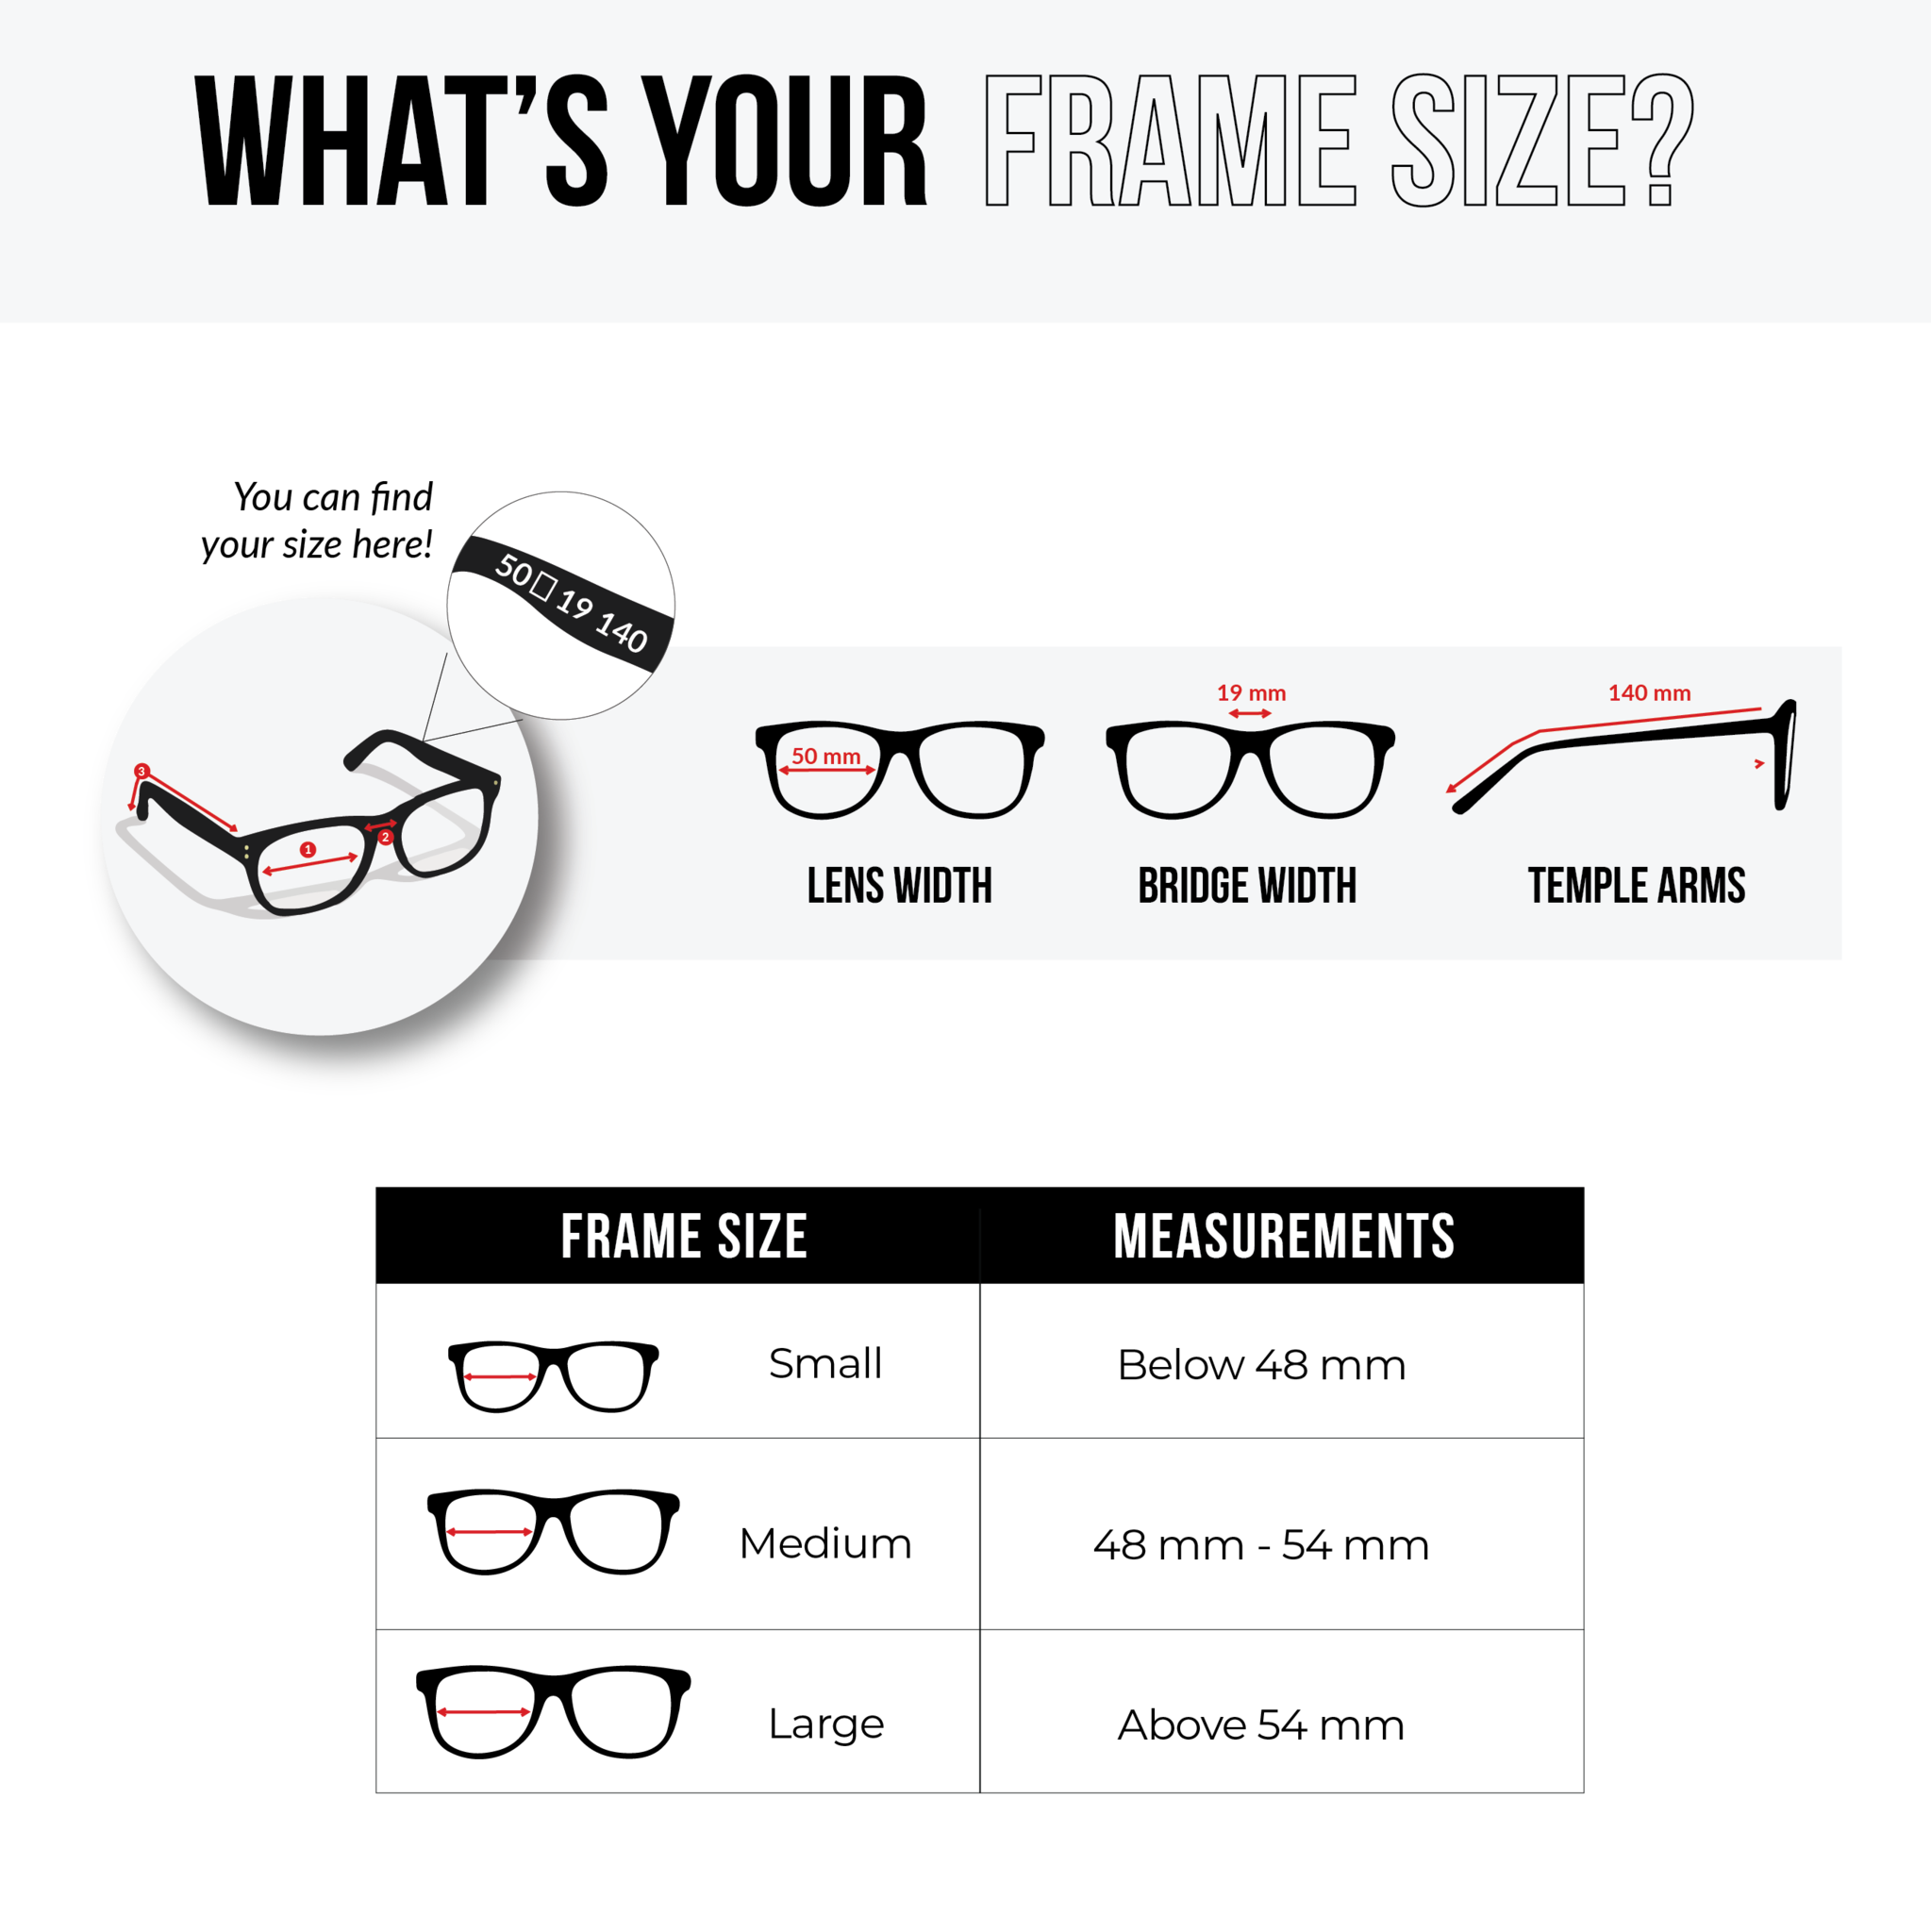 NS Classic - 8334 - Grey - Eyeglasses